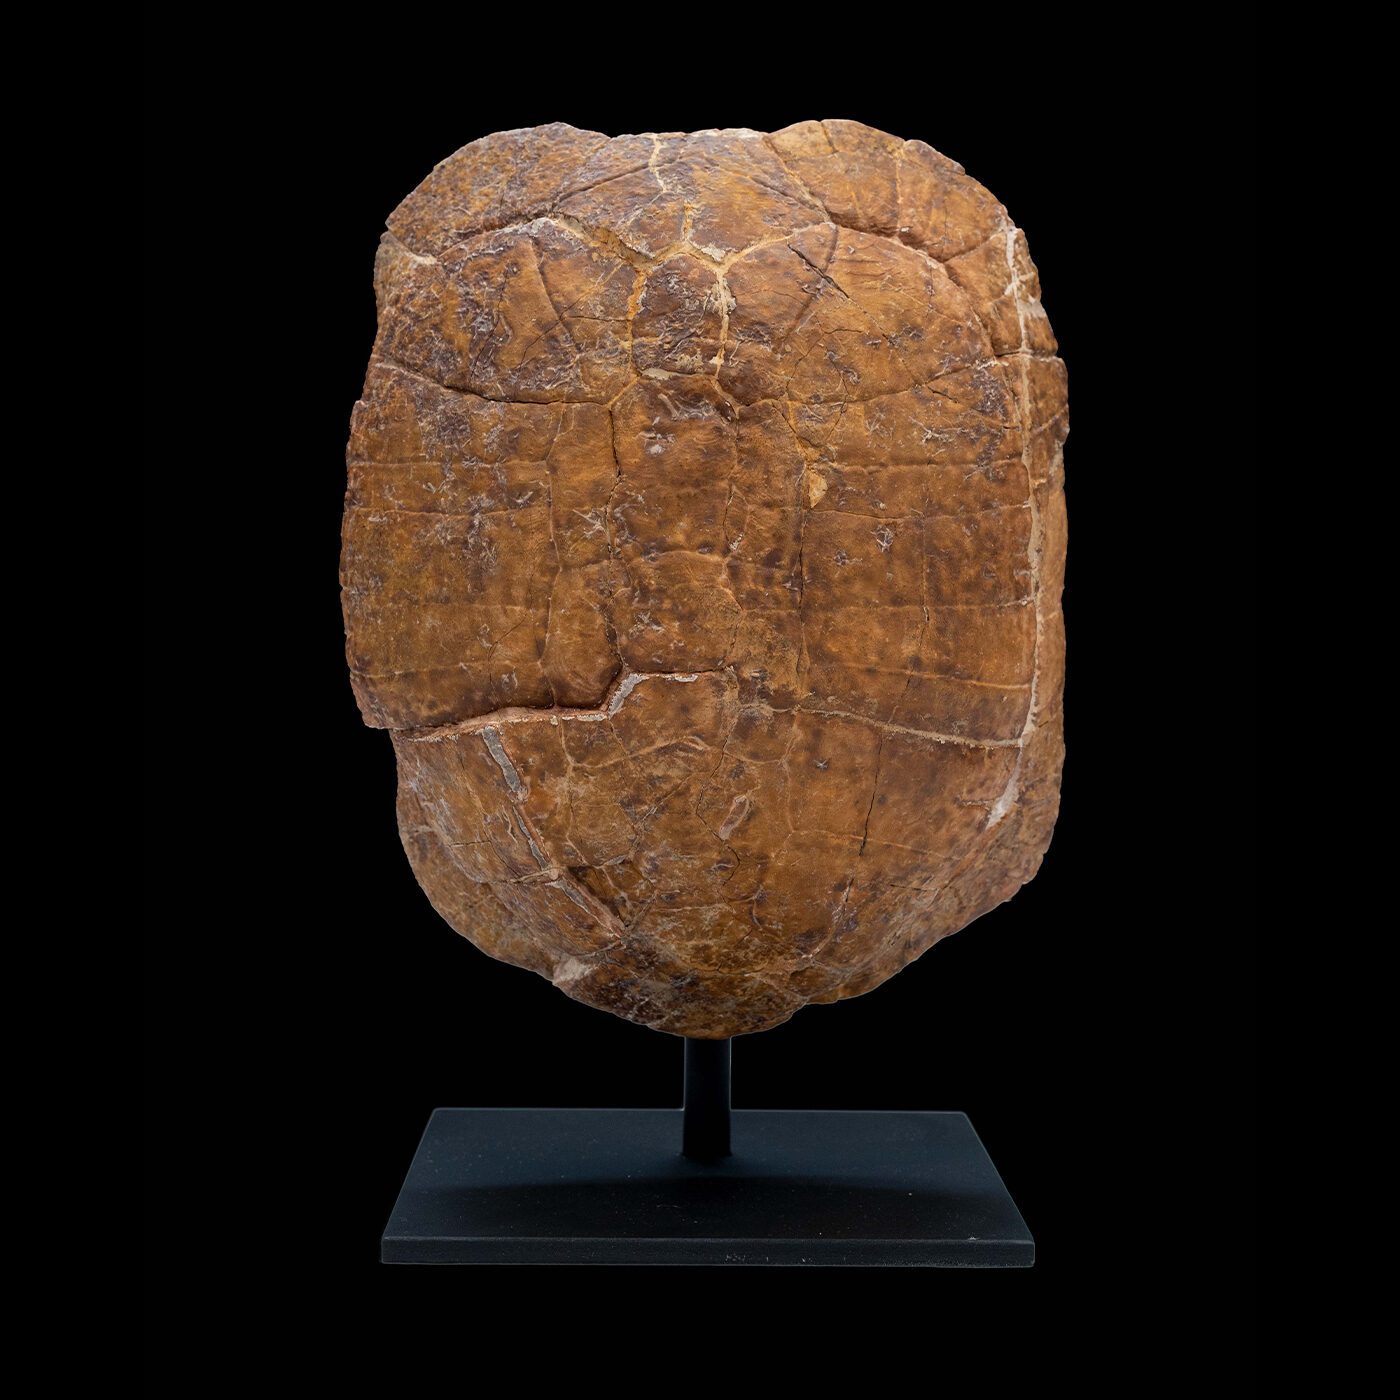 Large Sized Mounted Turtle Fossil South Dakota Oligocene Period